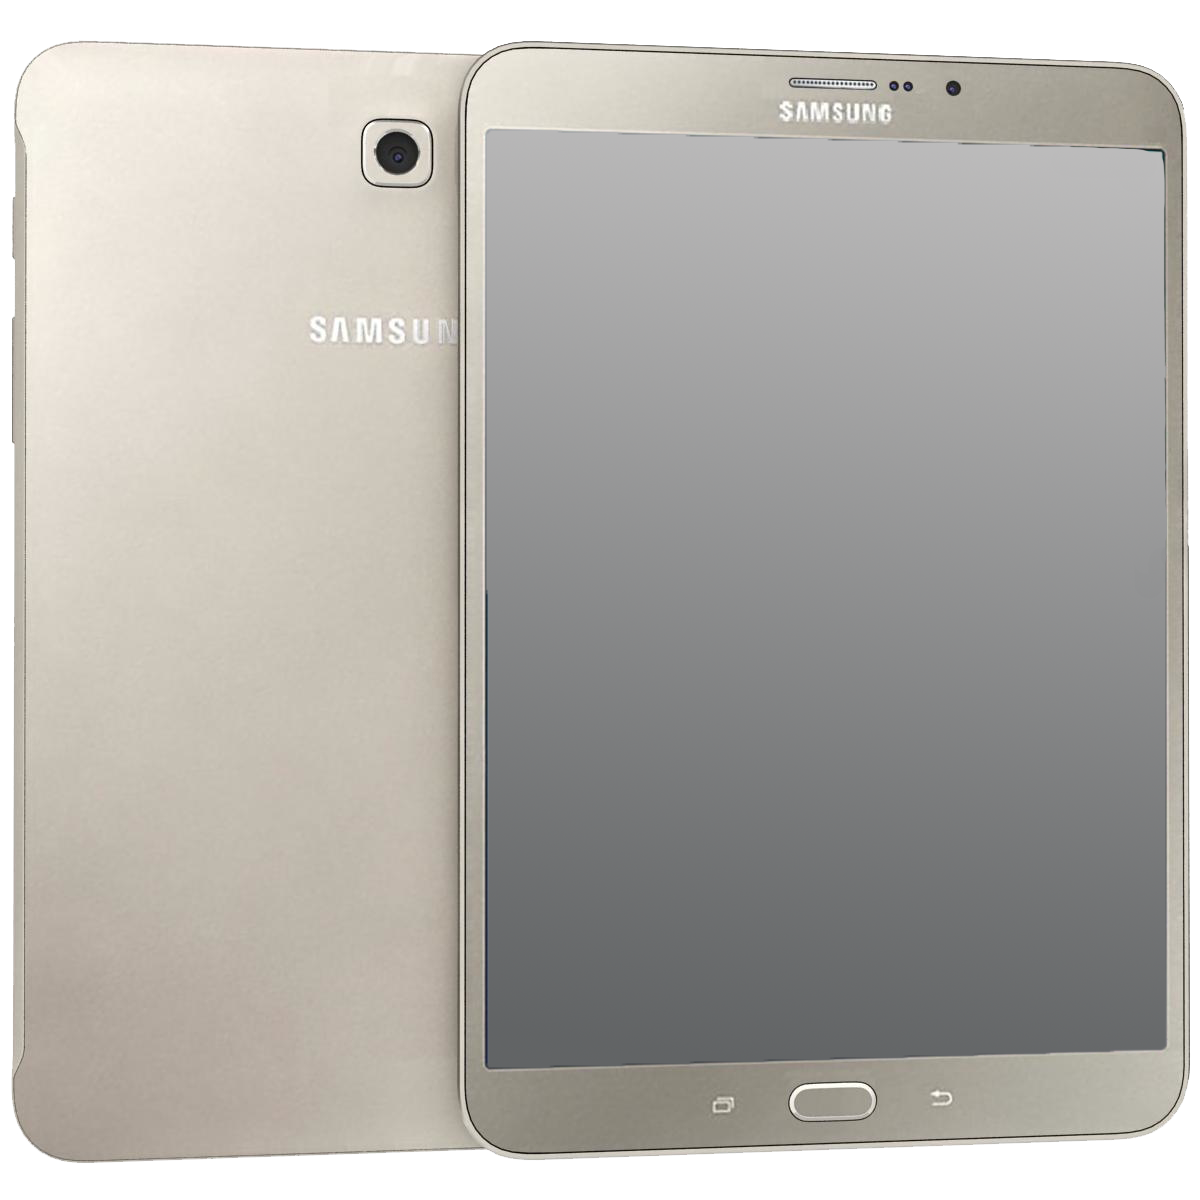 Samsung Galaxy Tab S T819 gold - Ohne Vertrag